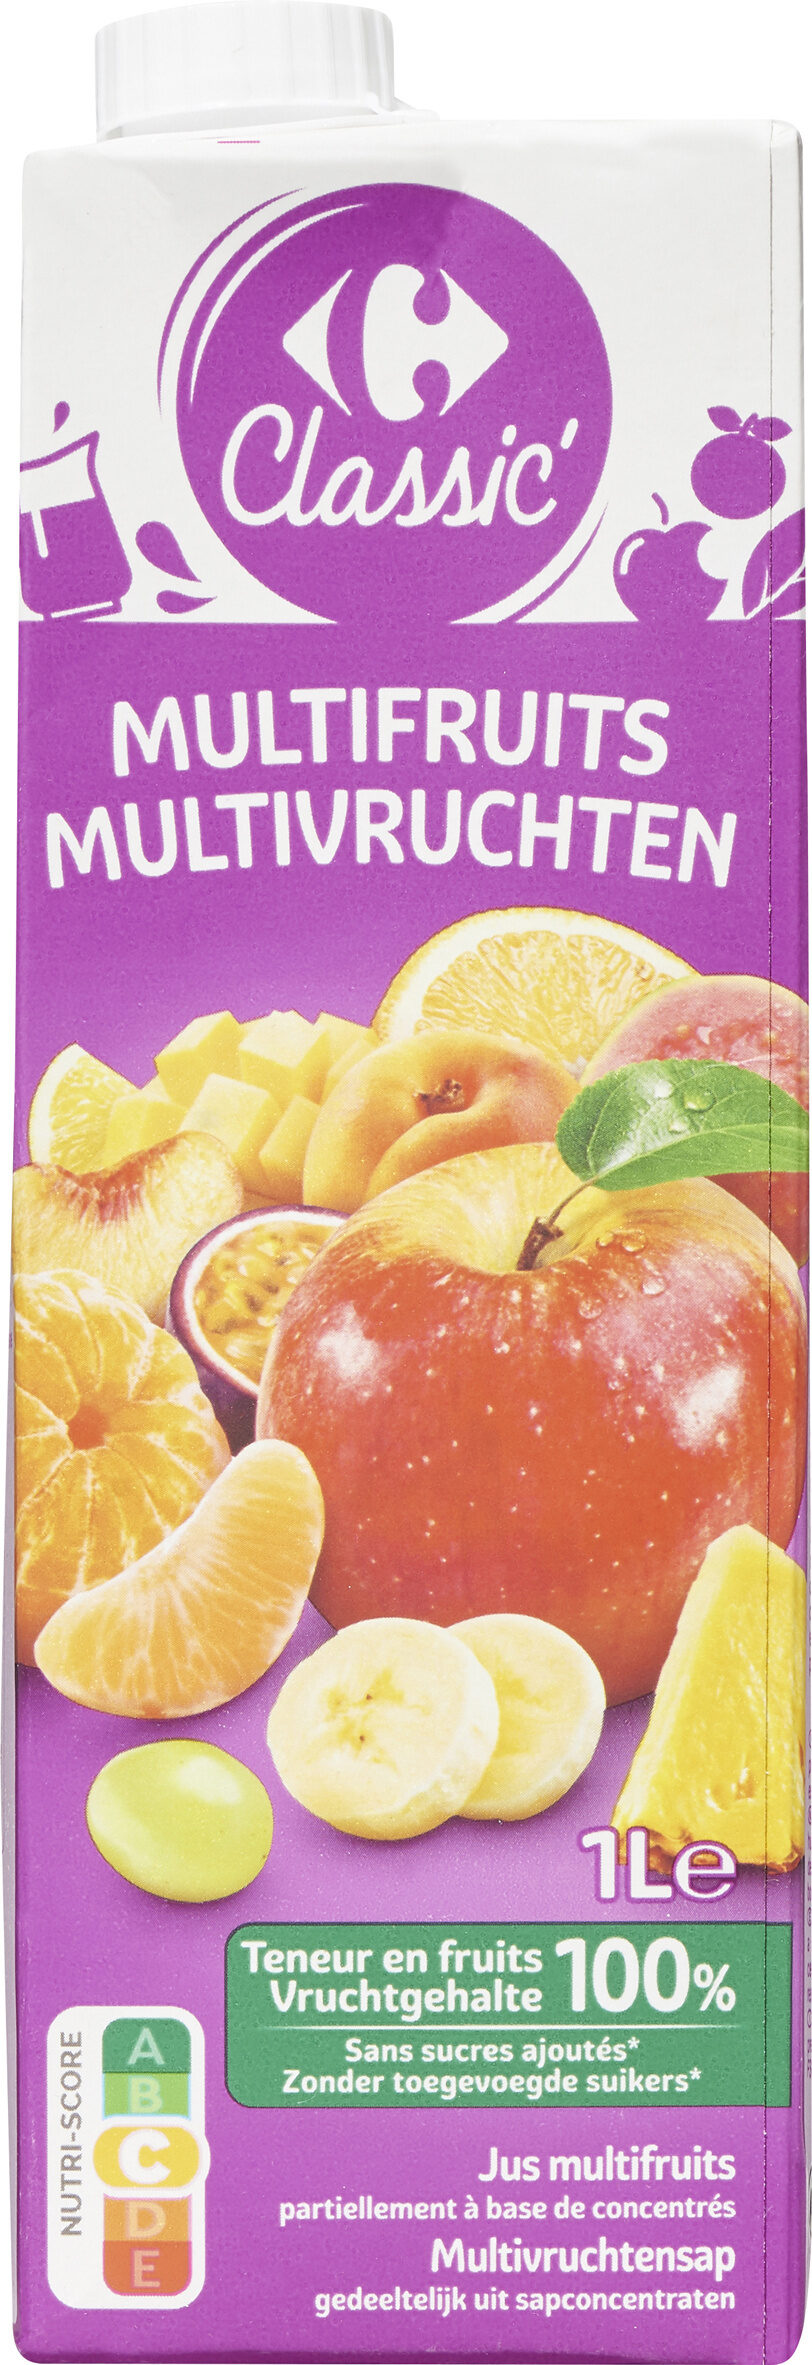 Multifruits - Produit - fr